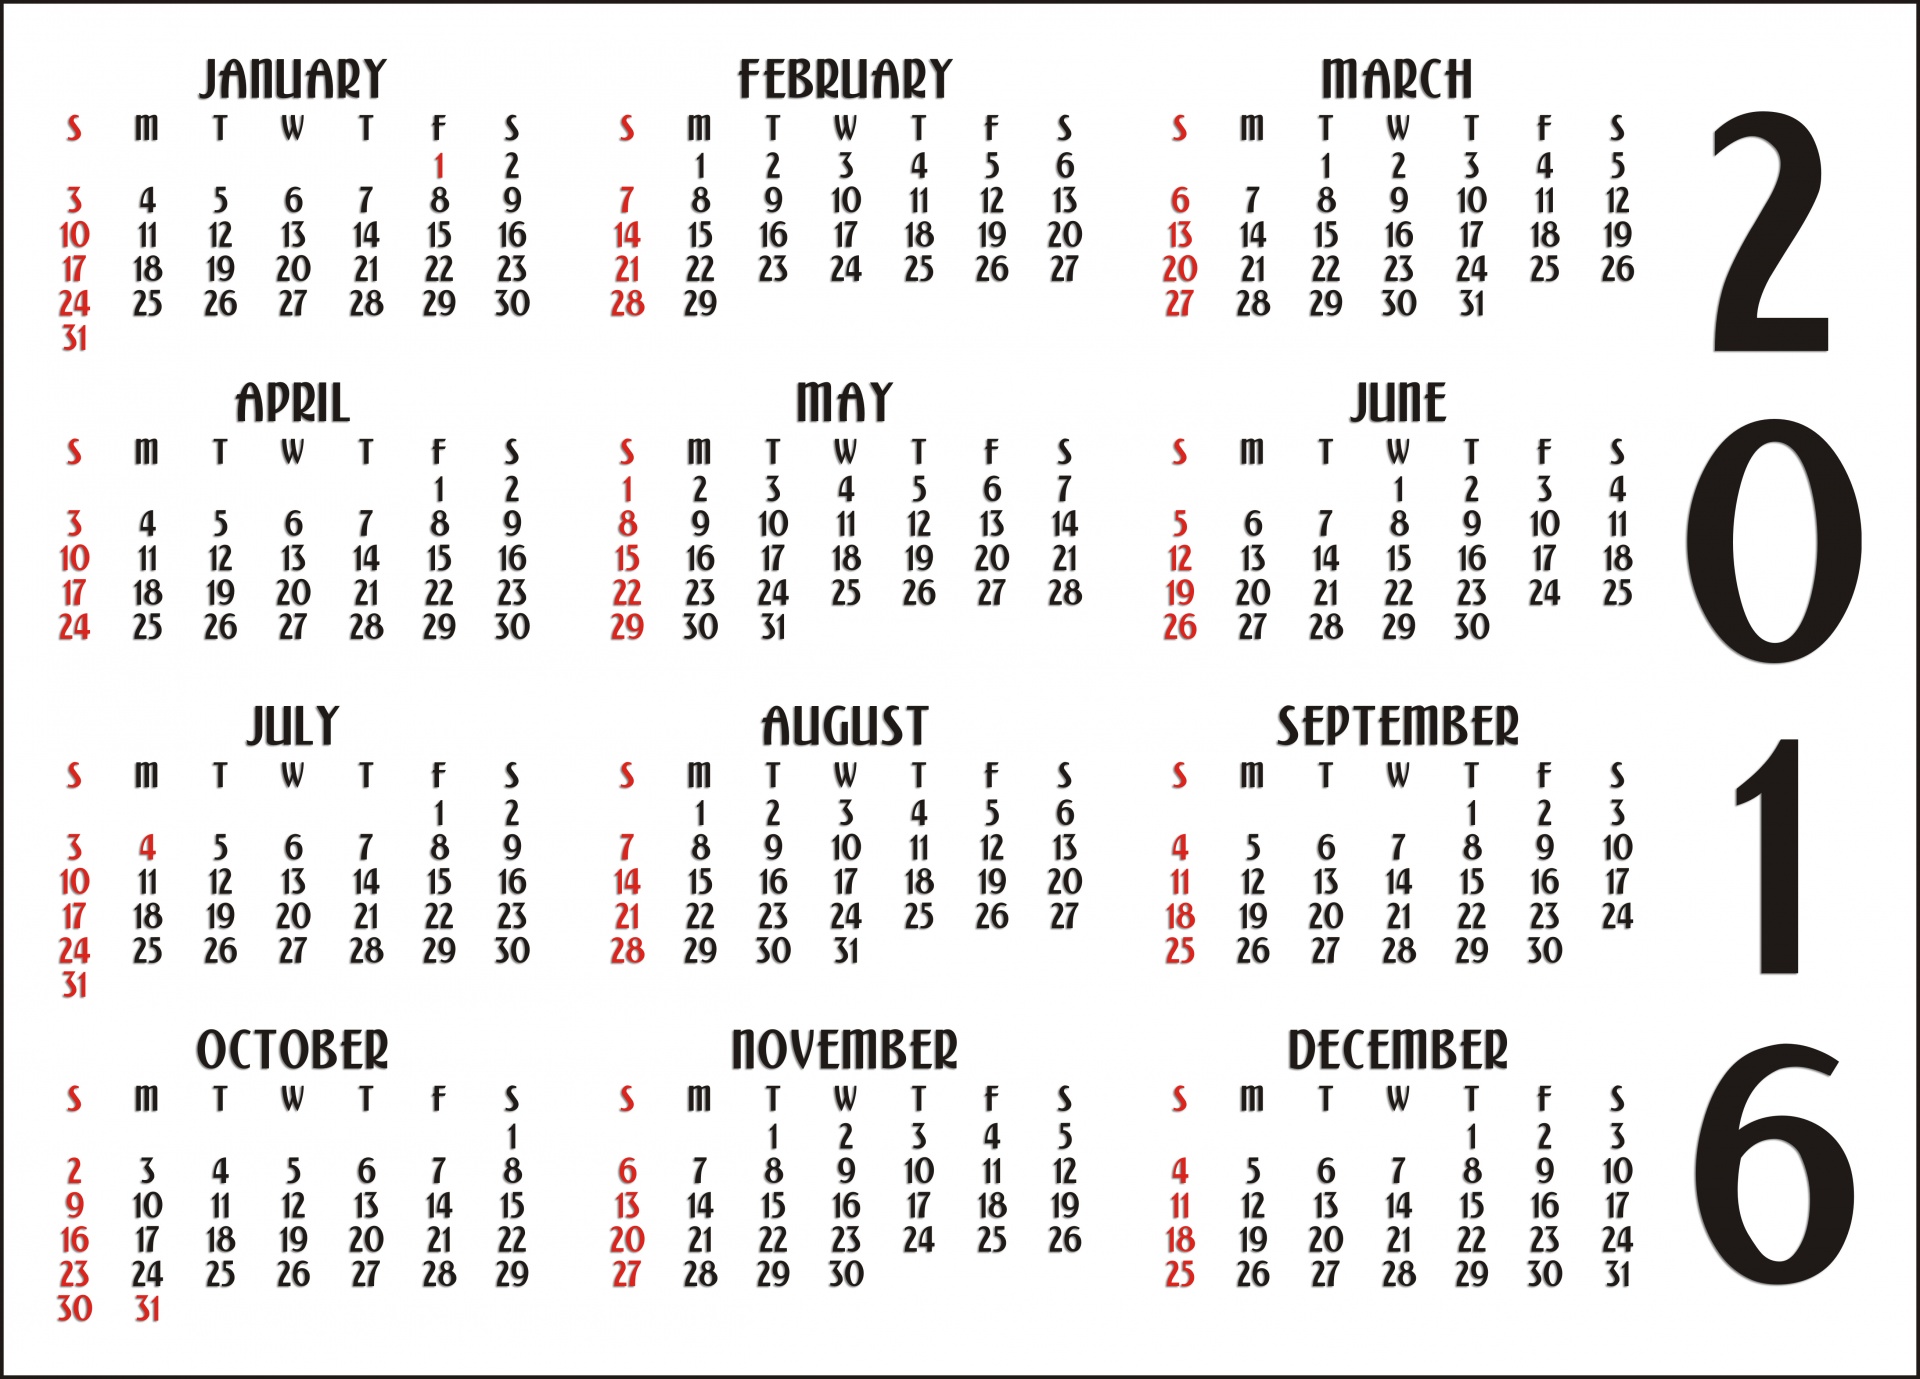 calendar-2016-calendar-months-days-years-free-image-from-needpix